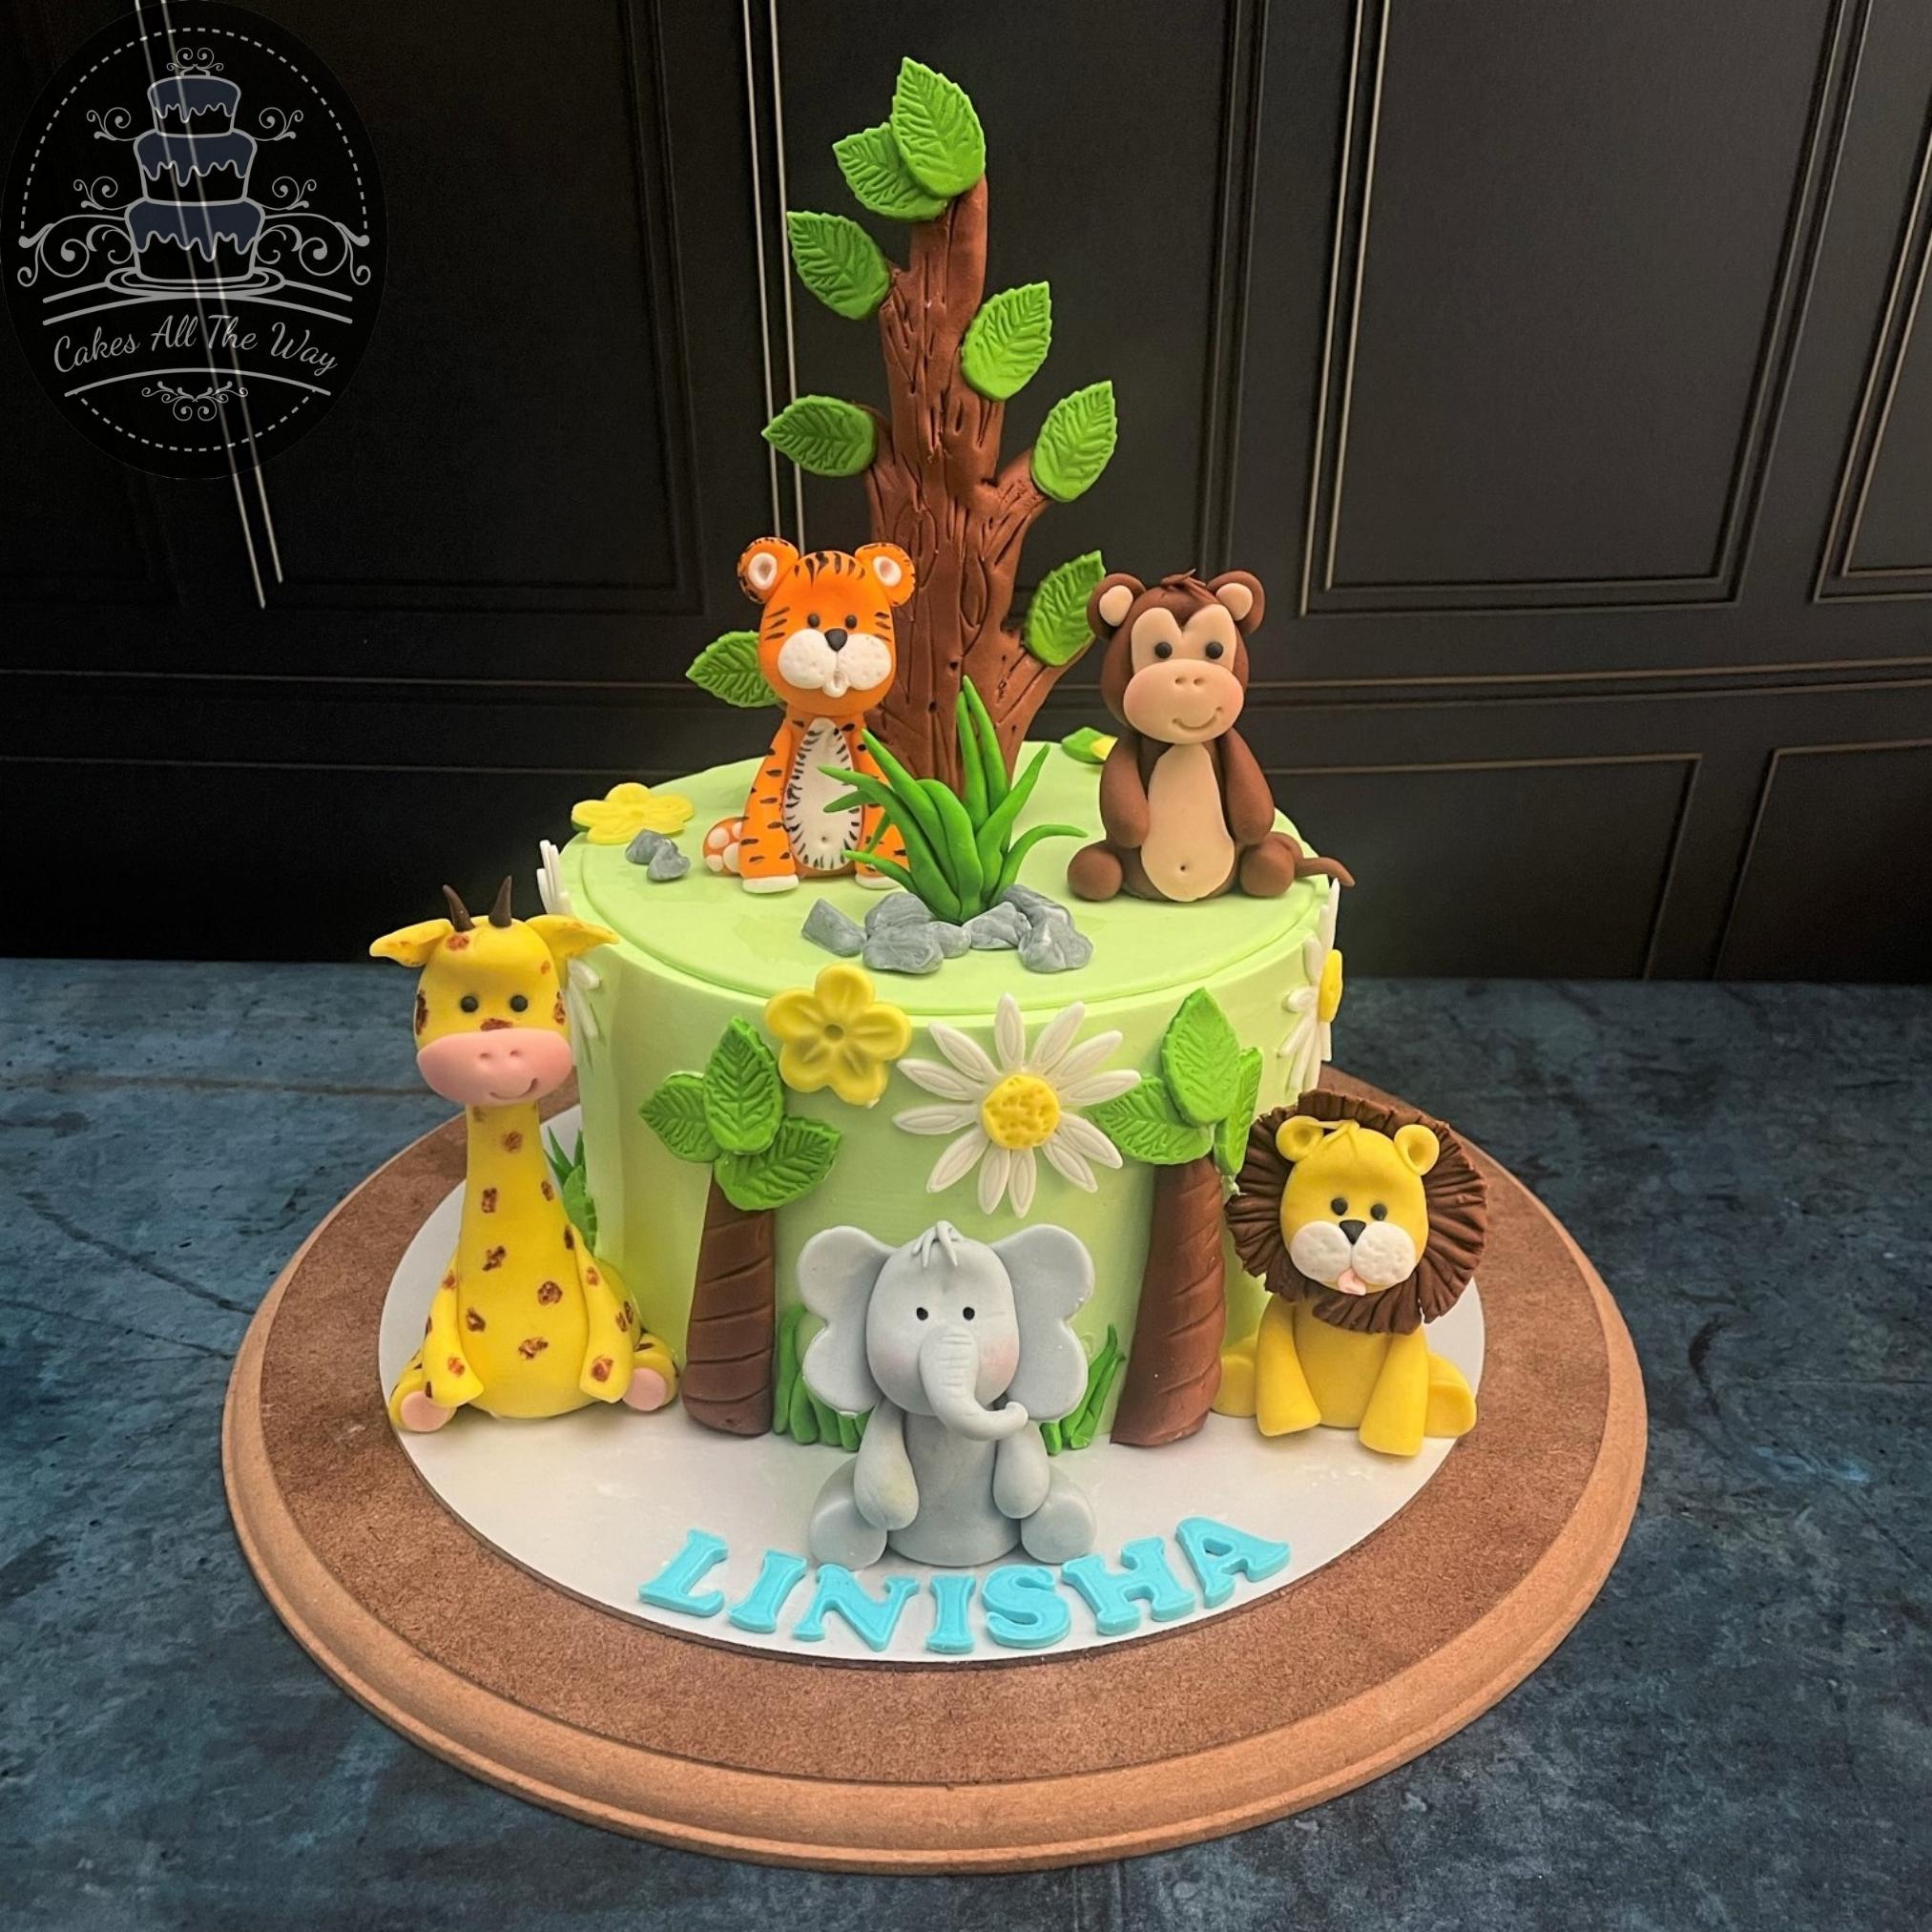 Animal jungle theme cake 1 kg 500 gm vanilla